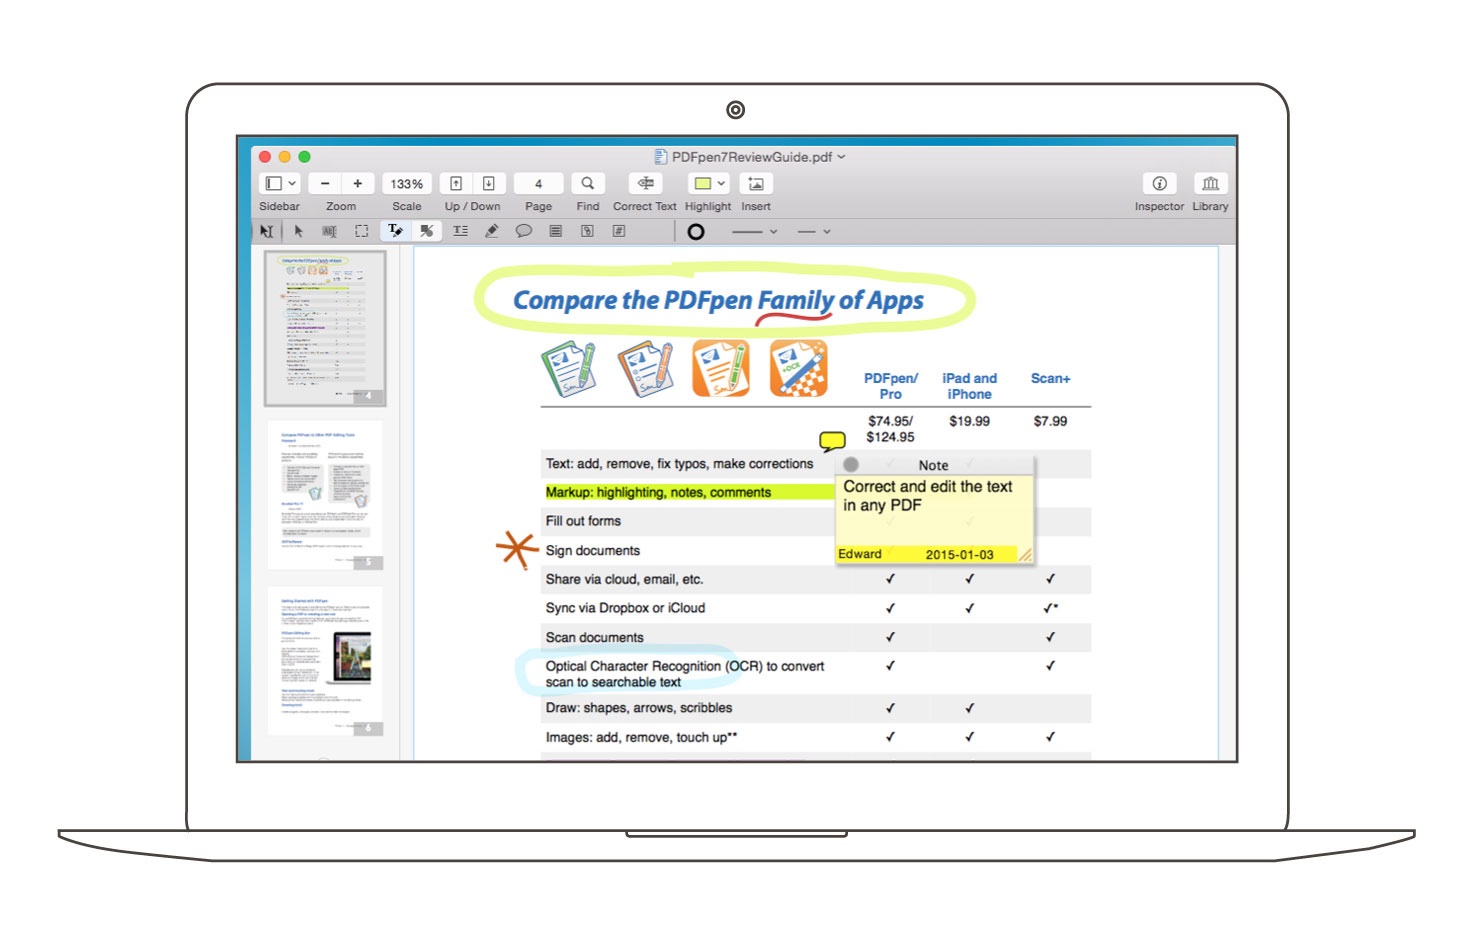 PDFpen 10.1 improves filling forms, link visibility, AppleScript